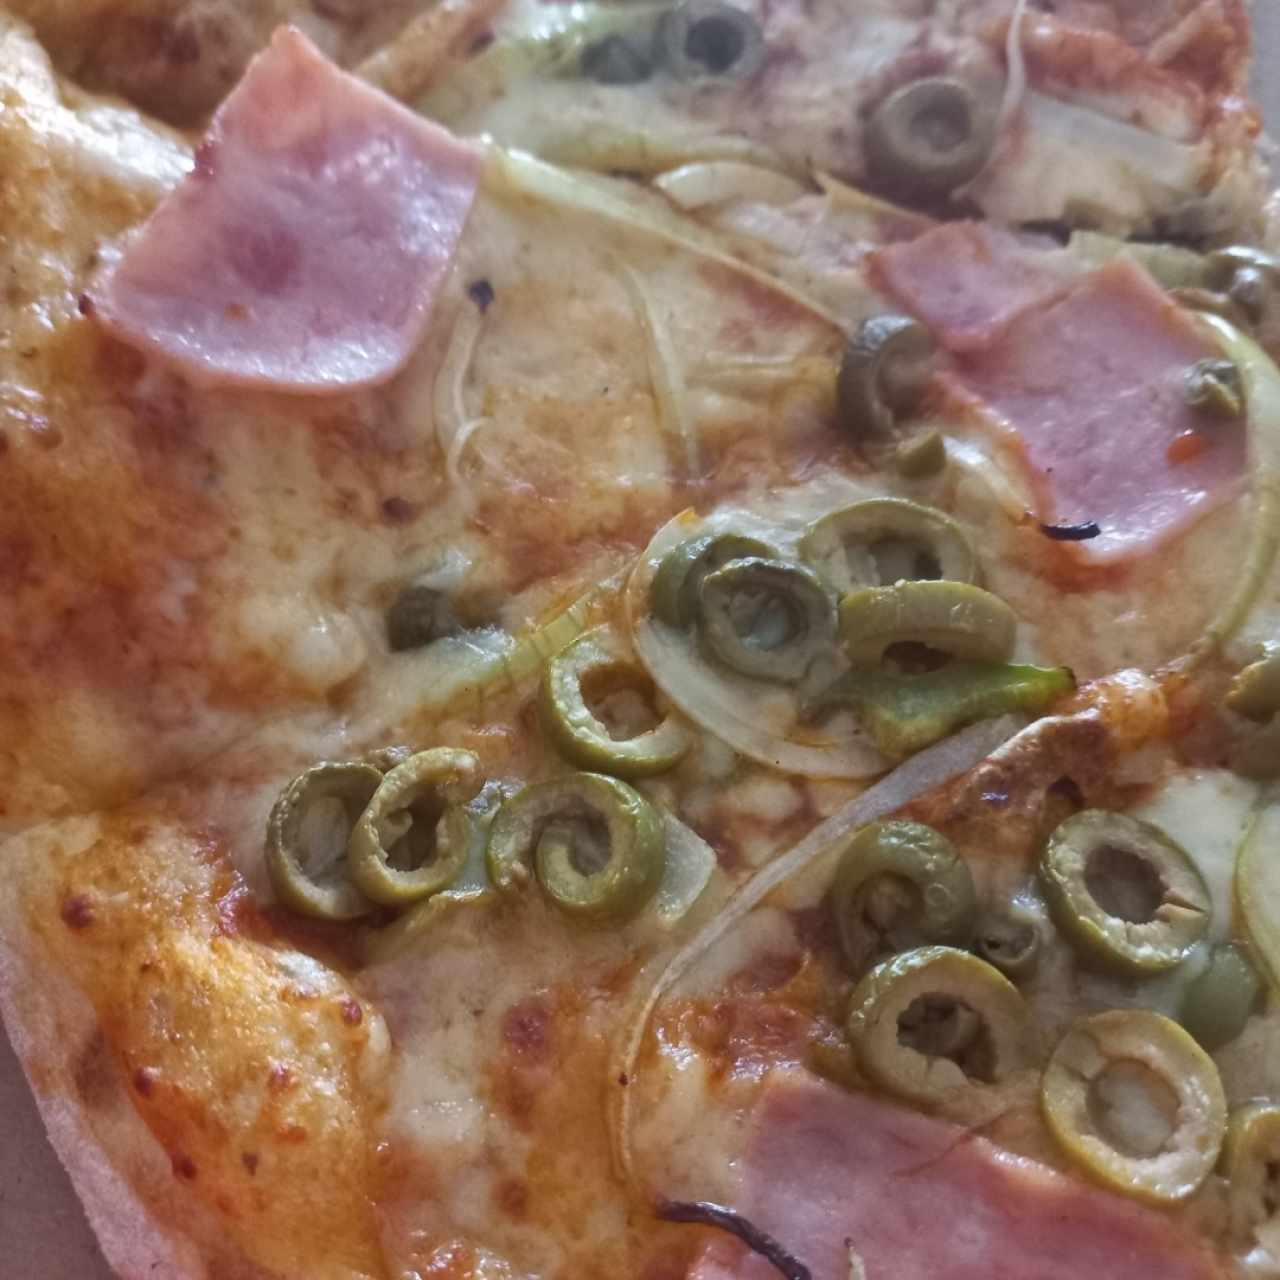 PIZZAS - Pizza familiar 14" 3 ingredientes